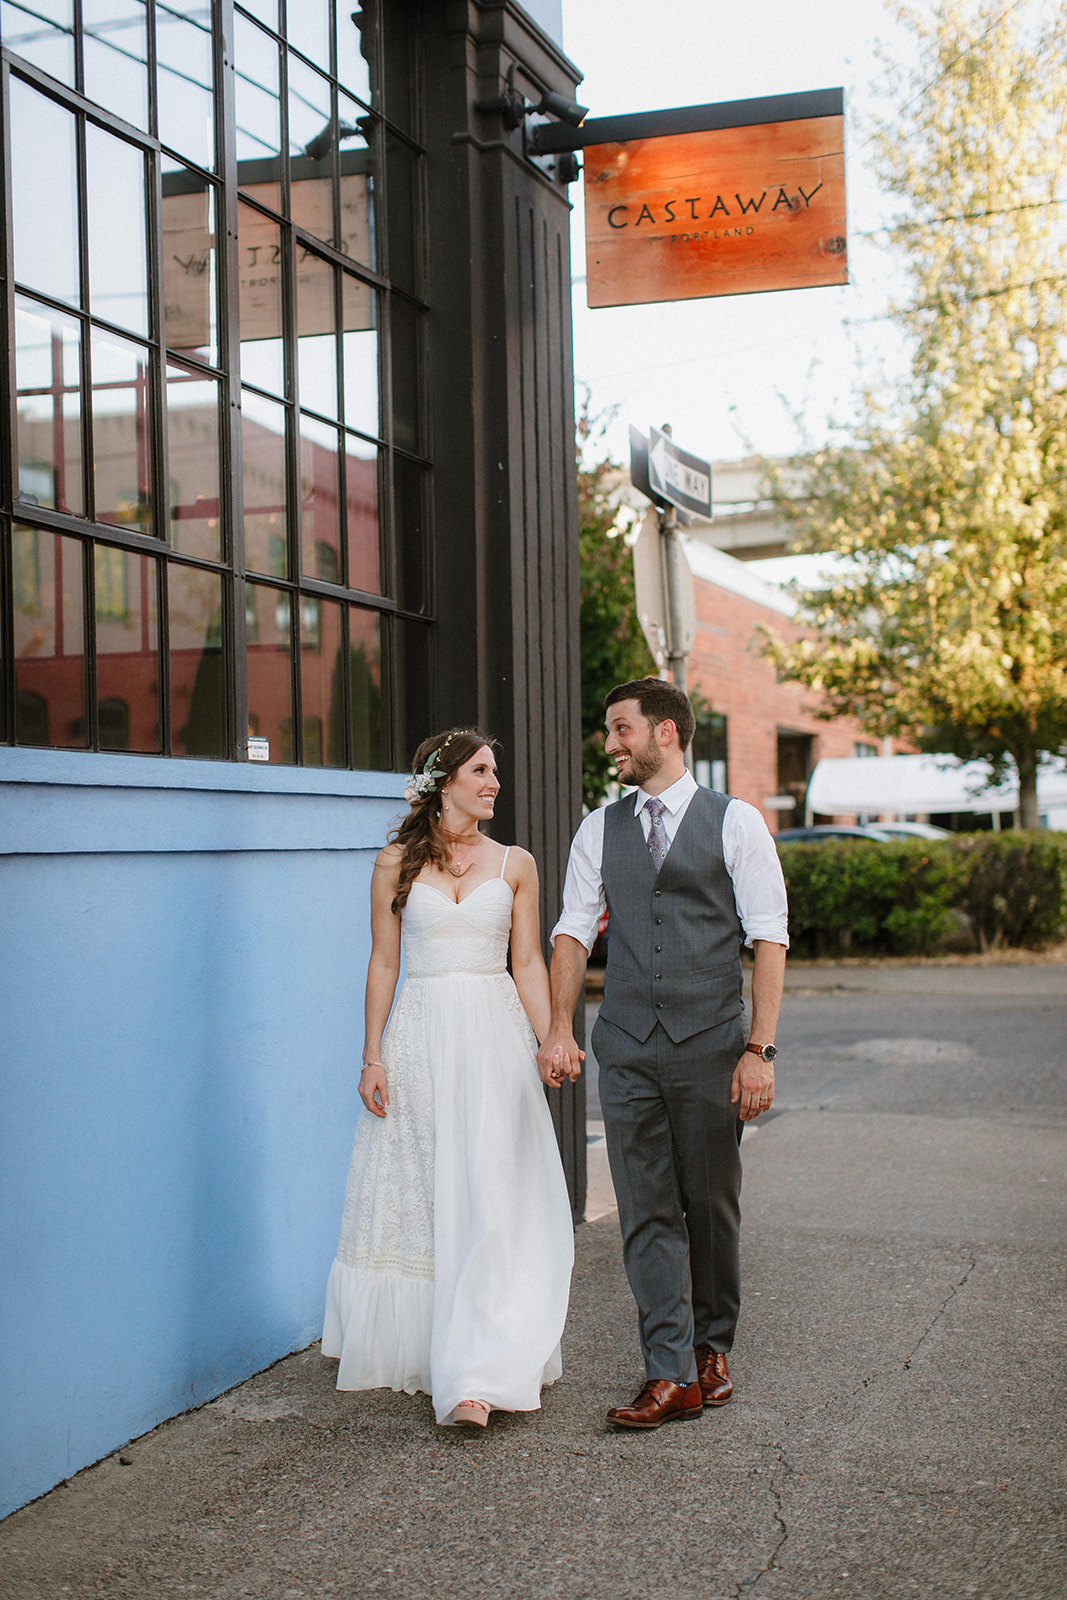 Andrea Zajonc Photography | Castaway Portland wedding | Peachy Keen Coordination